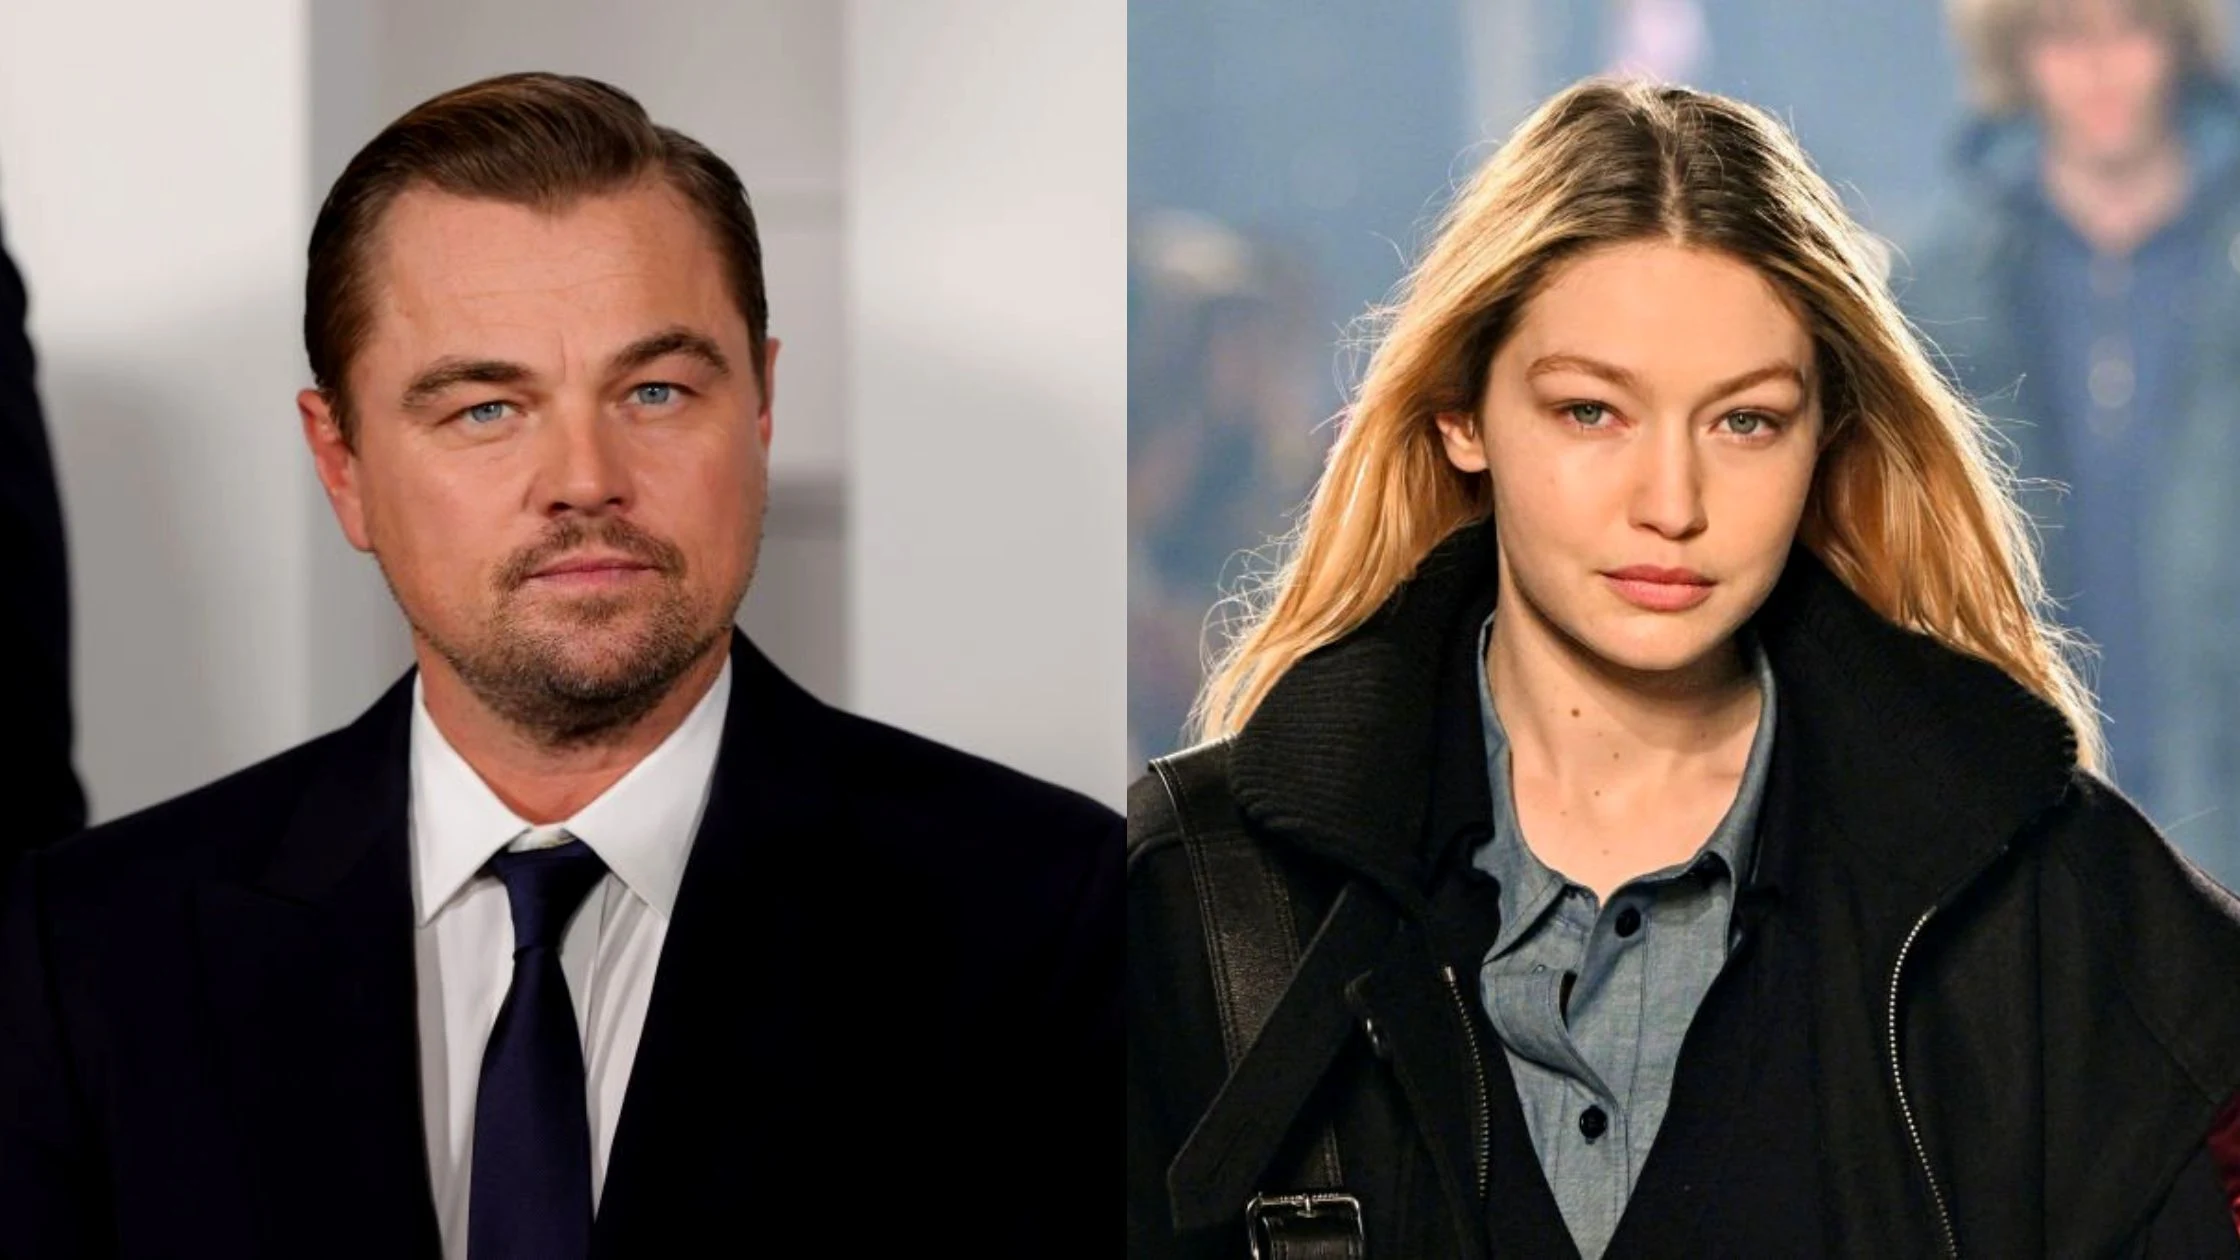 Gigi Hadid & Leonardo DiCaprio Relationship Rumors Their Romance Speculation Exploding Social Media